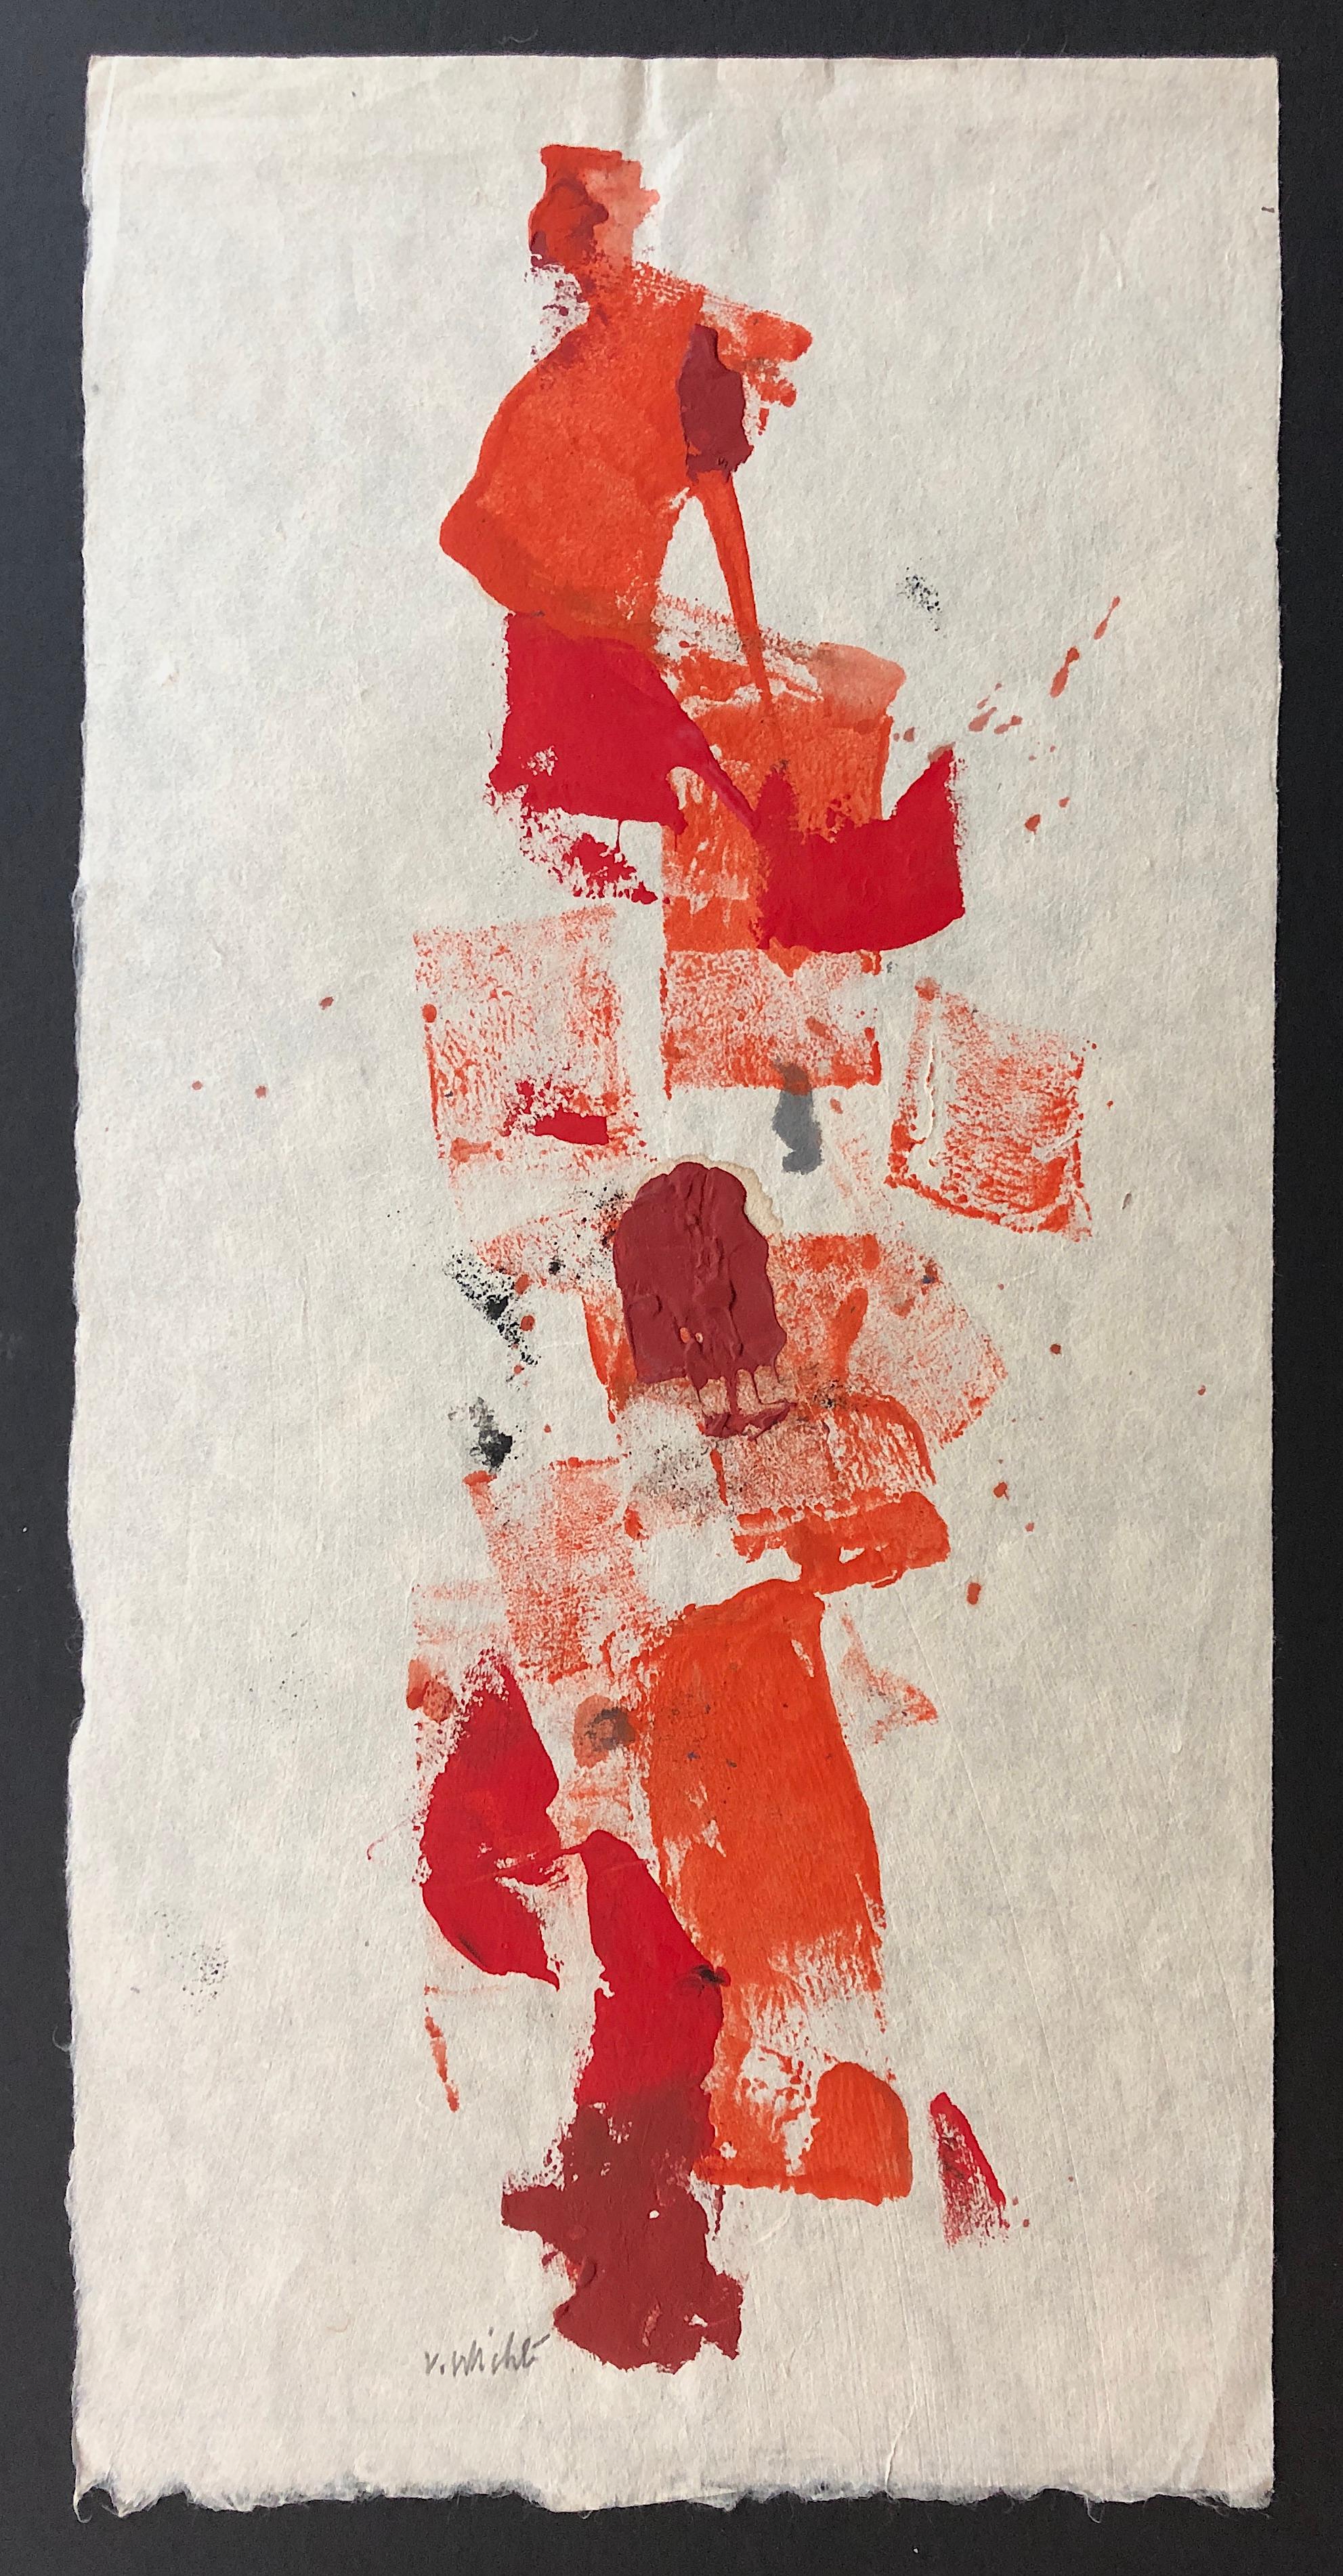 Untitled-009 Abstraction in Reds mixed media painting by John Von Wicht - Art by John von Wicht